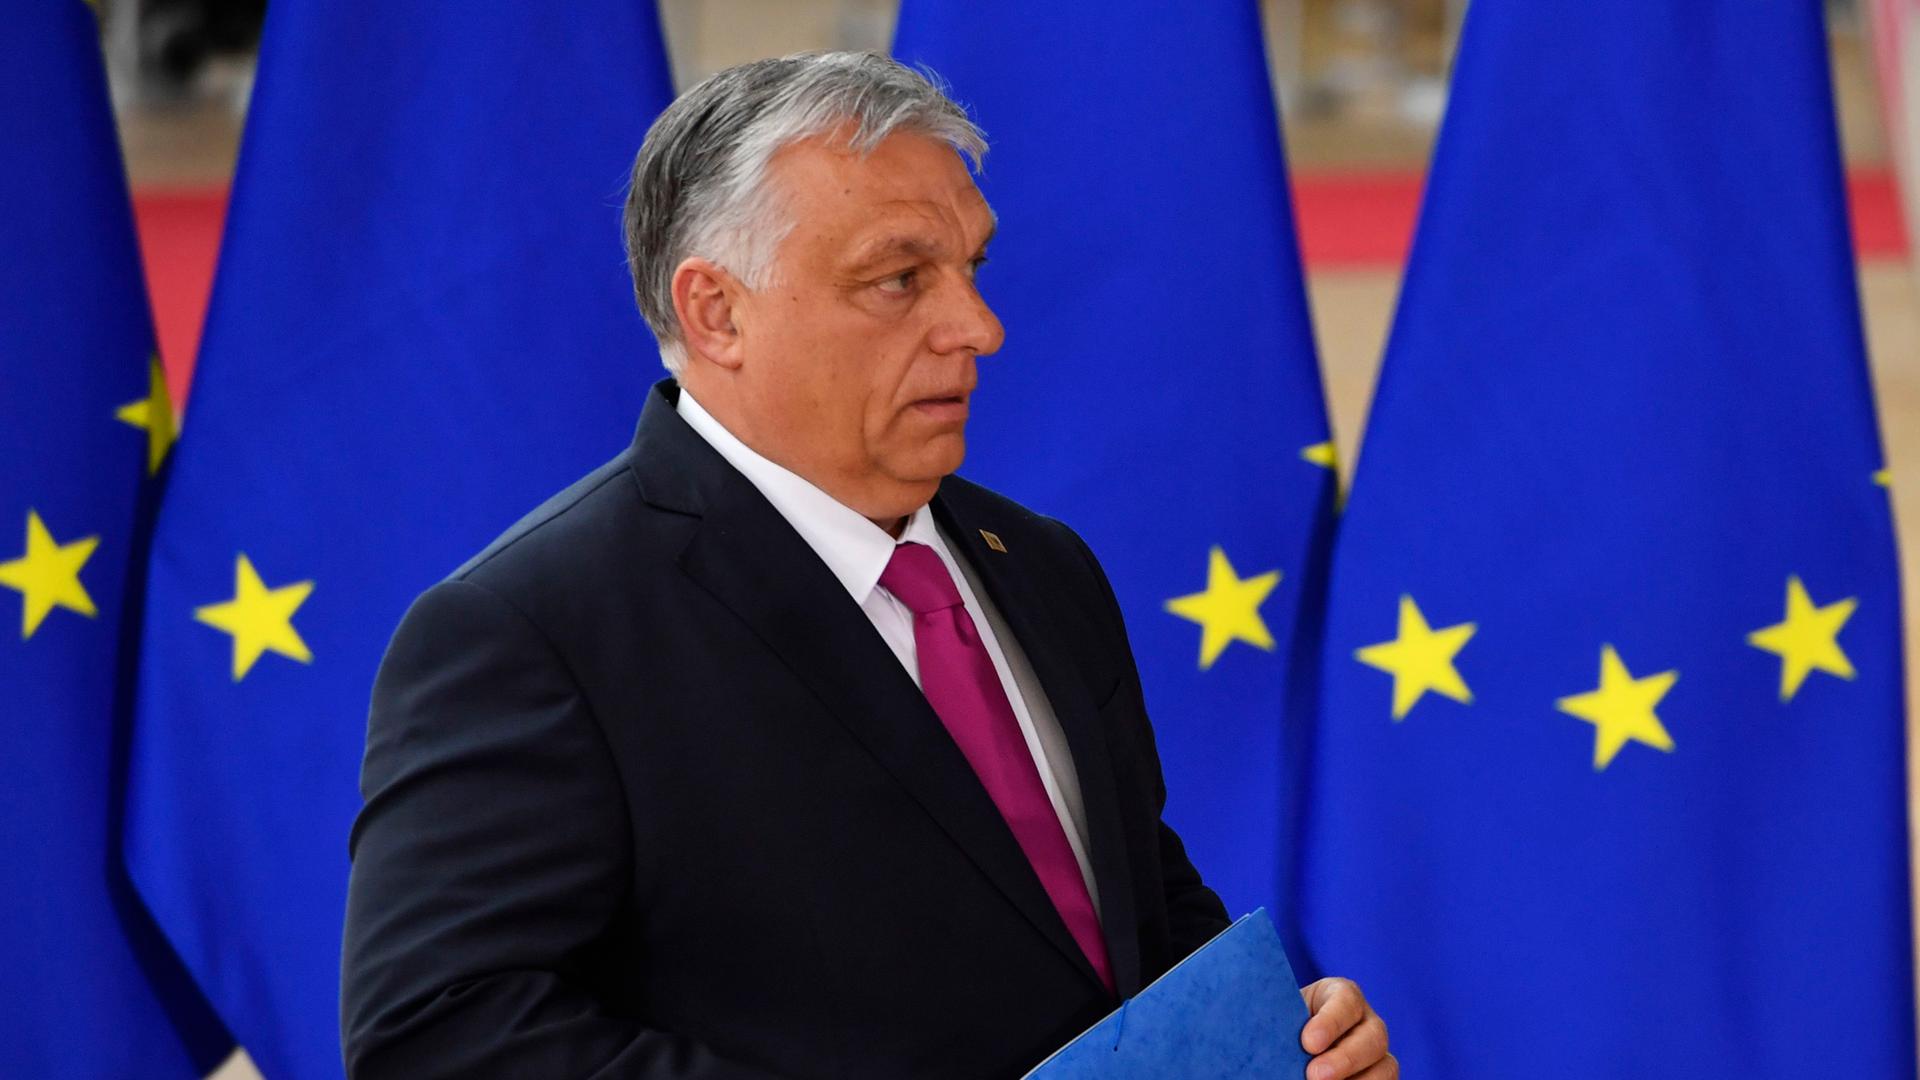 Belgien, Brüssel: Viktor Orban, Premierminister von Ungarn, läuft an EU-Fahnen entlang.